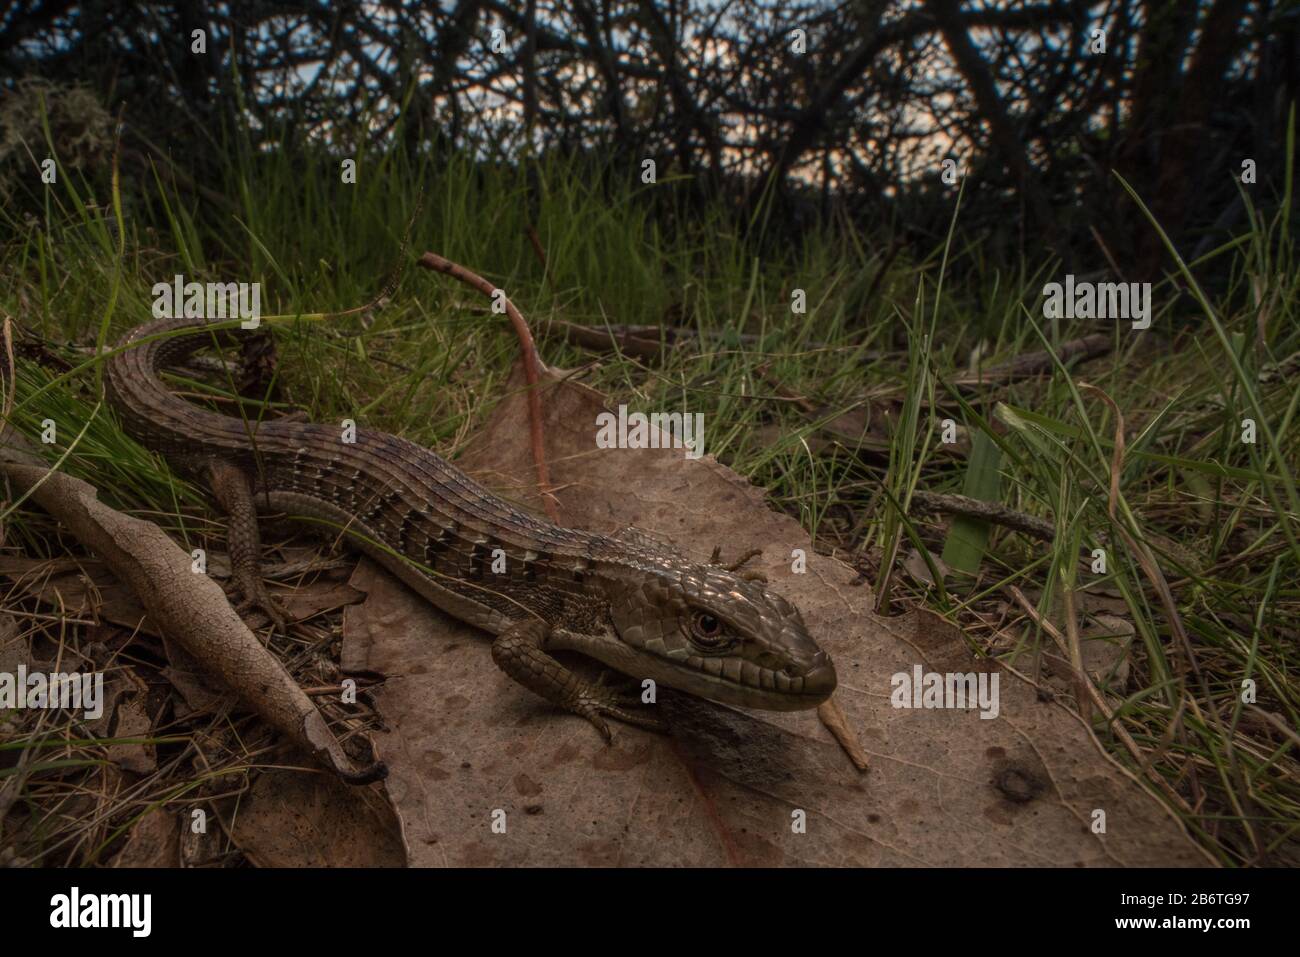 A Southern alligator lizard (Elgaria multicarinata), a species of lizard found in Western North America. Stock Photo